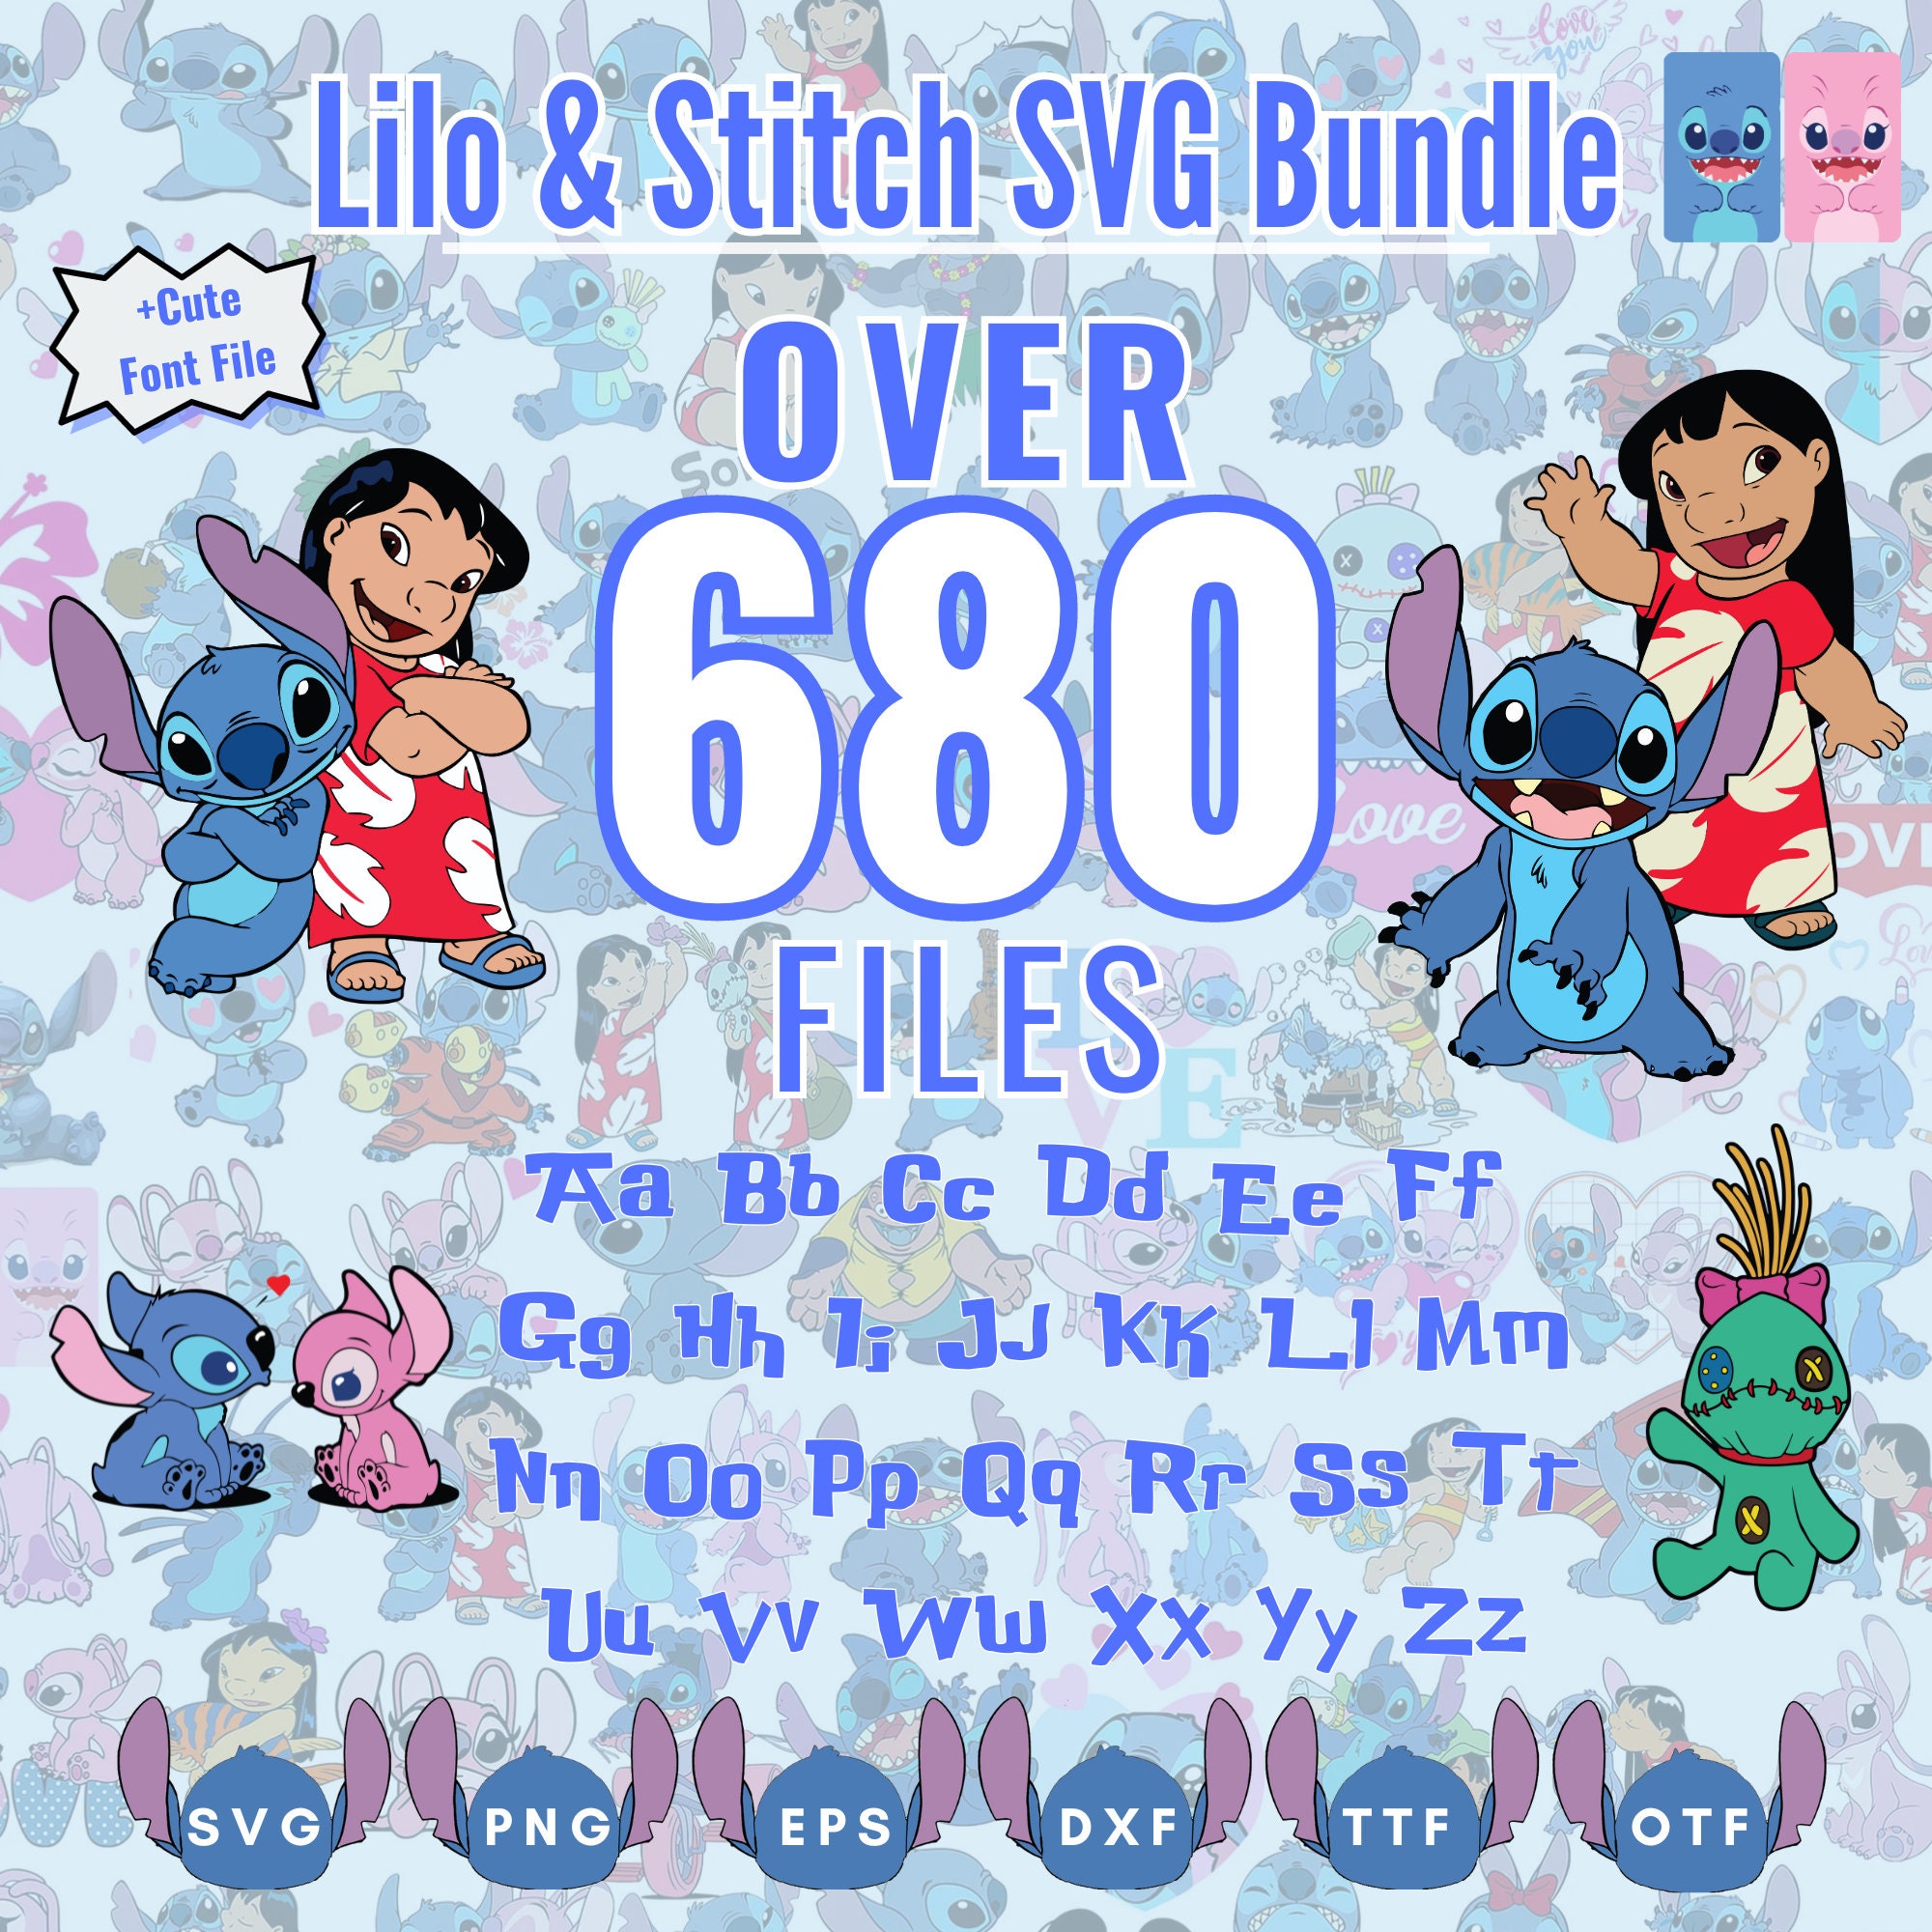 Disney Lilo & Stitch Birthday Girl png - Inspire Uplift